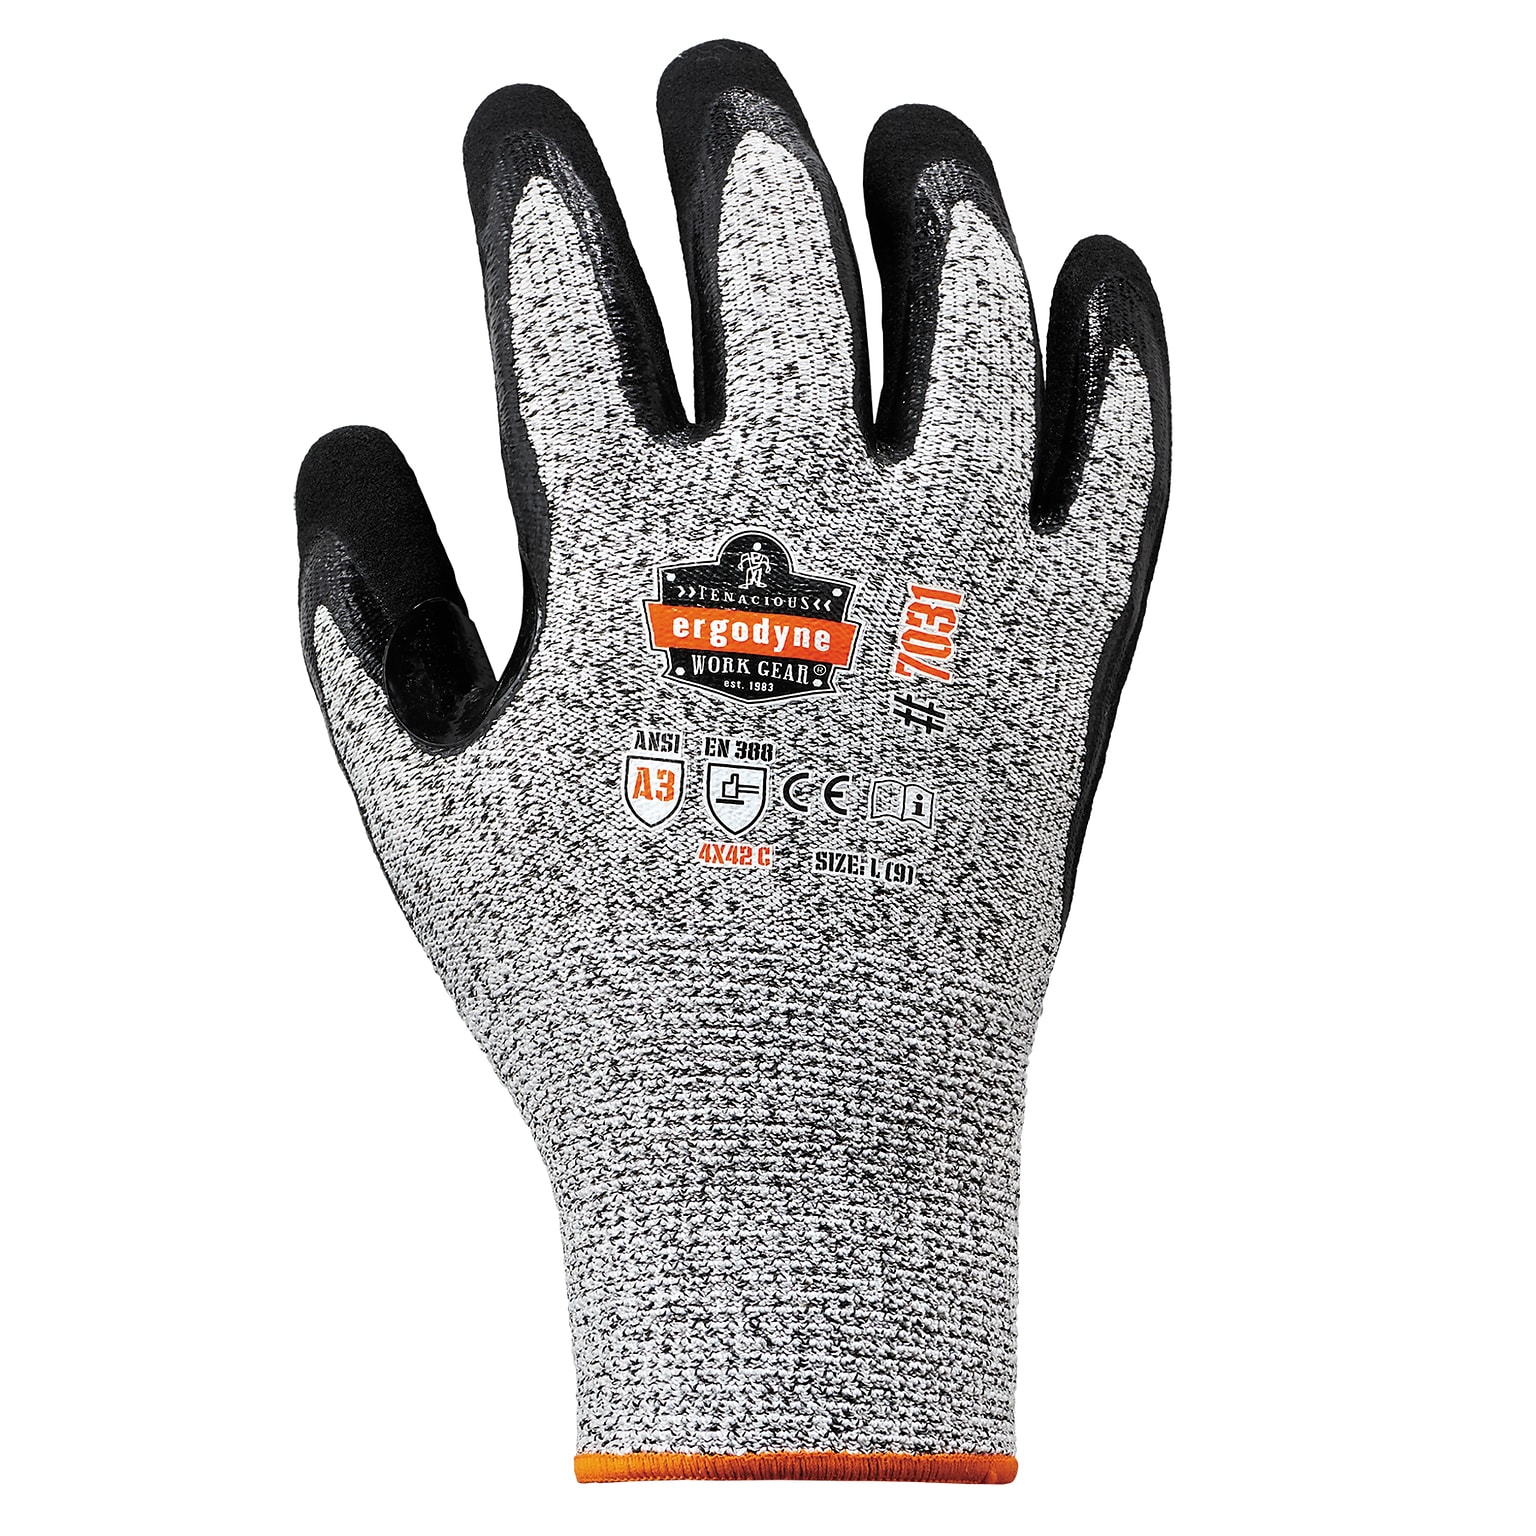 Ergodyne ProFlex 7031 Nitrile Coated Cut-Resistant Gloves, Medium, A3 Cut Level, Gray, 144 Pairs (17883)